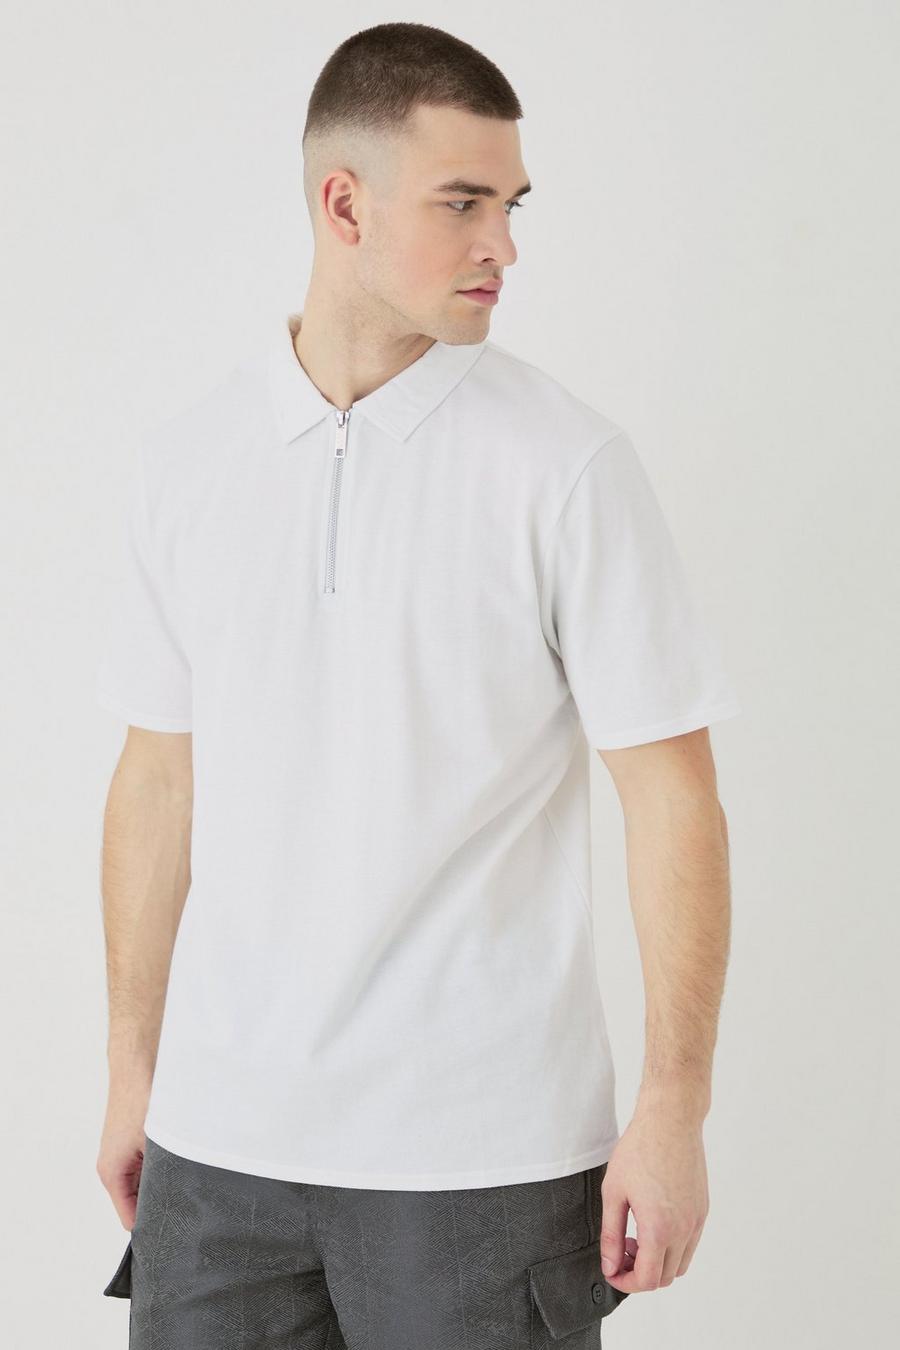 Tall Pique Poloshirt mit 1/4 Reißverschluss, White